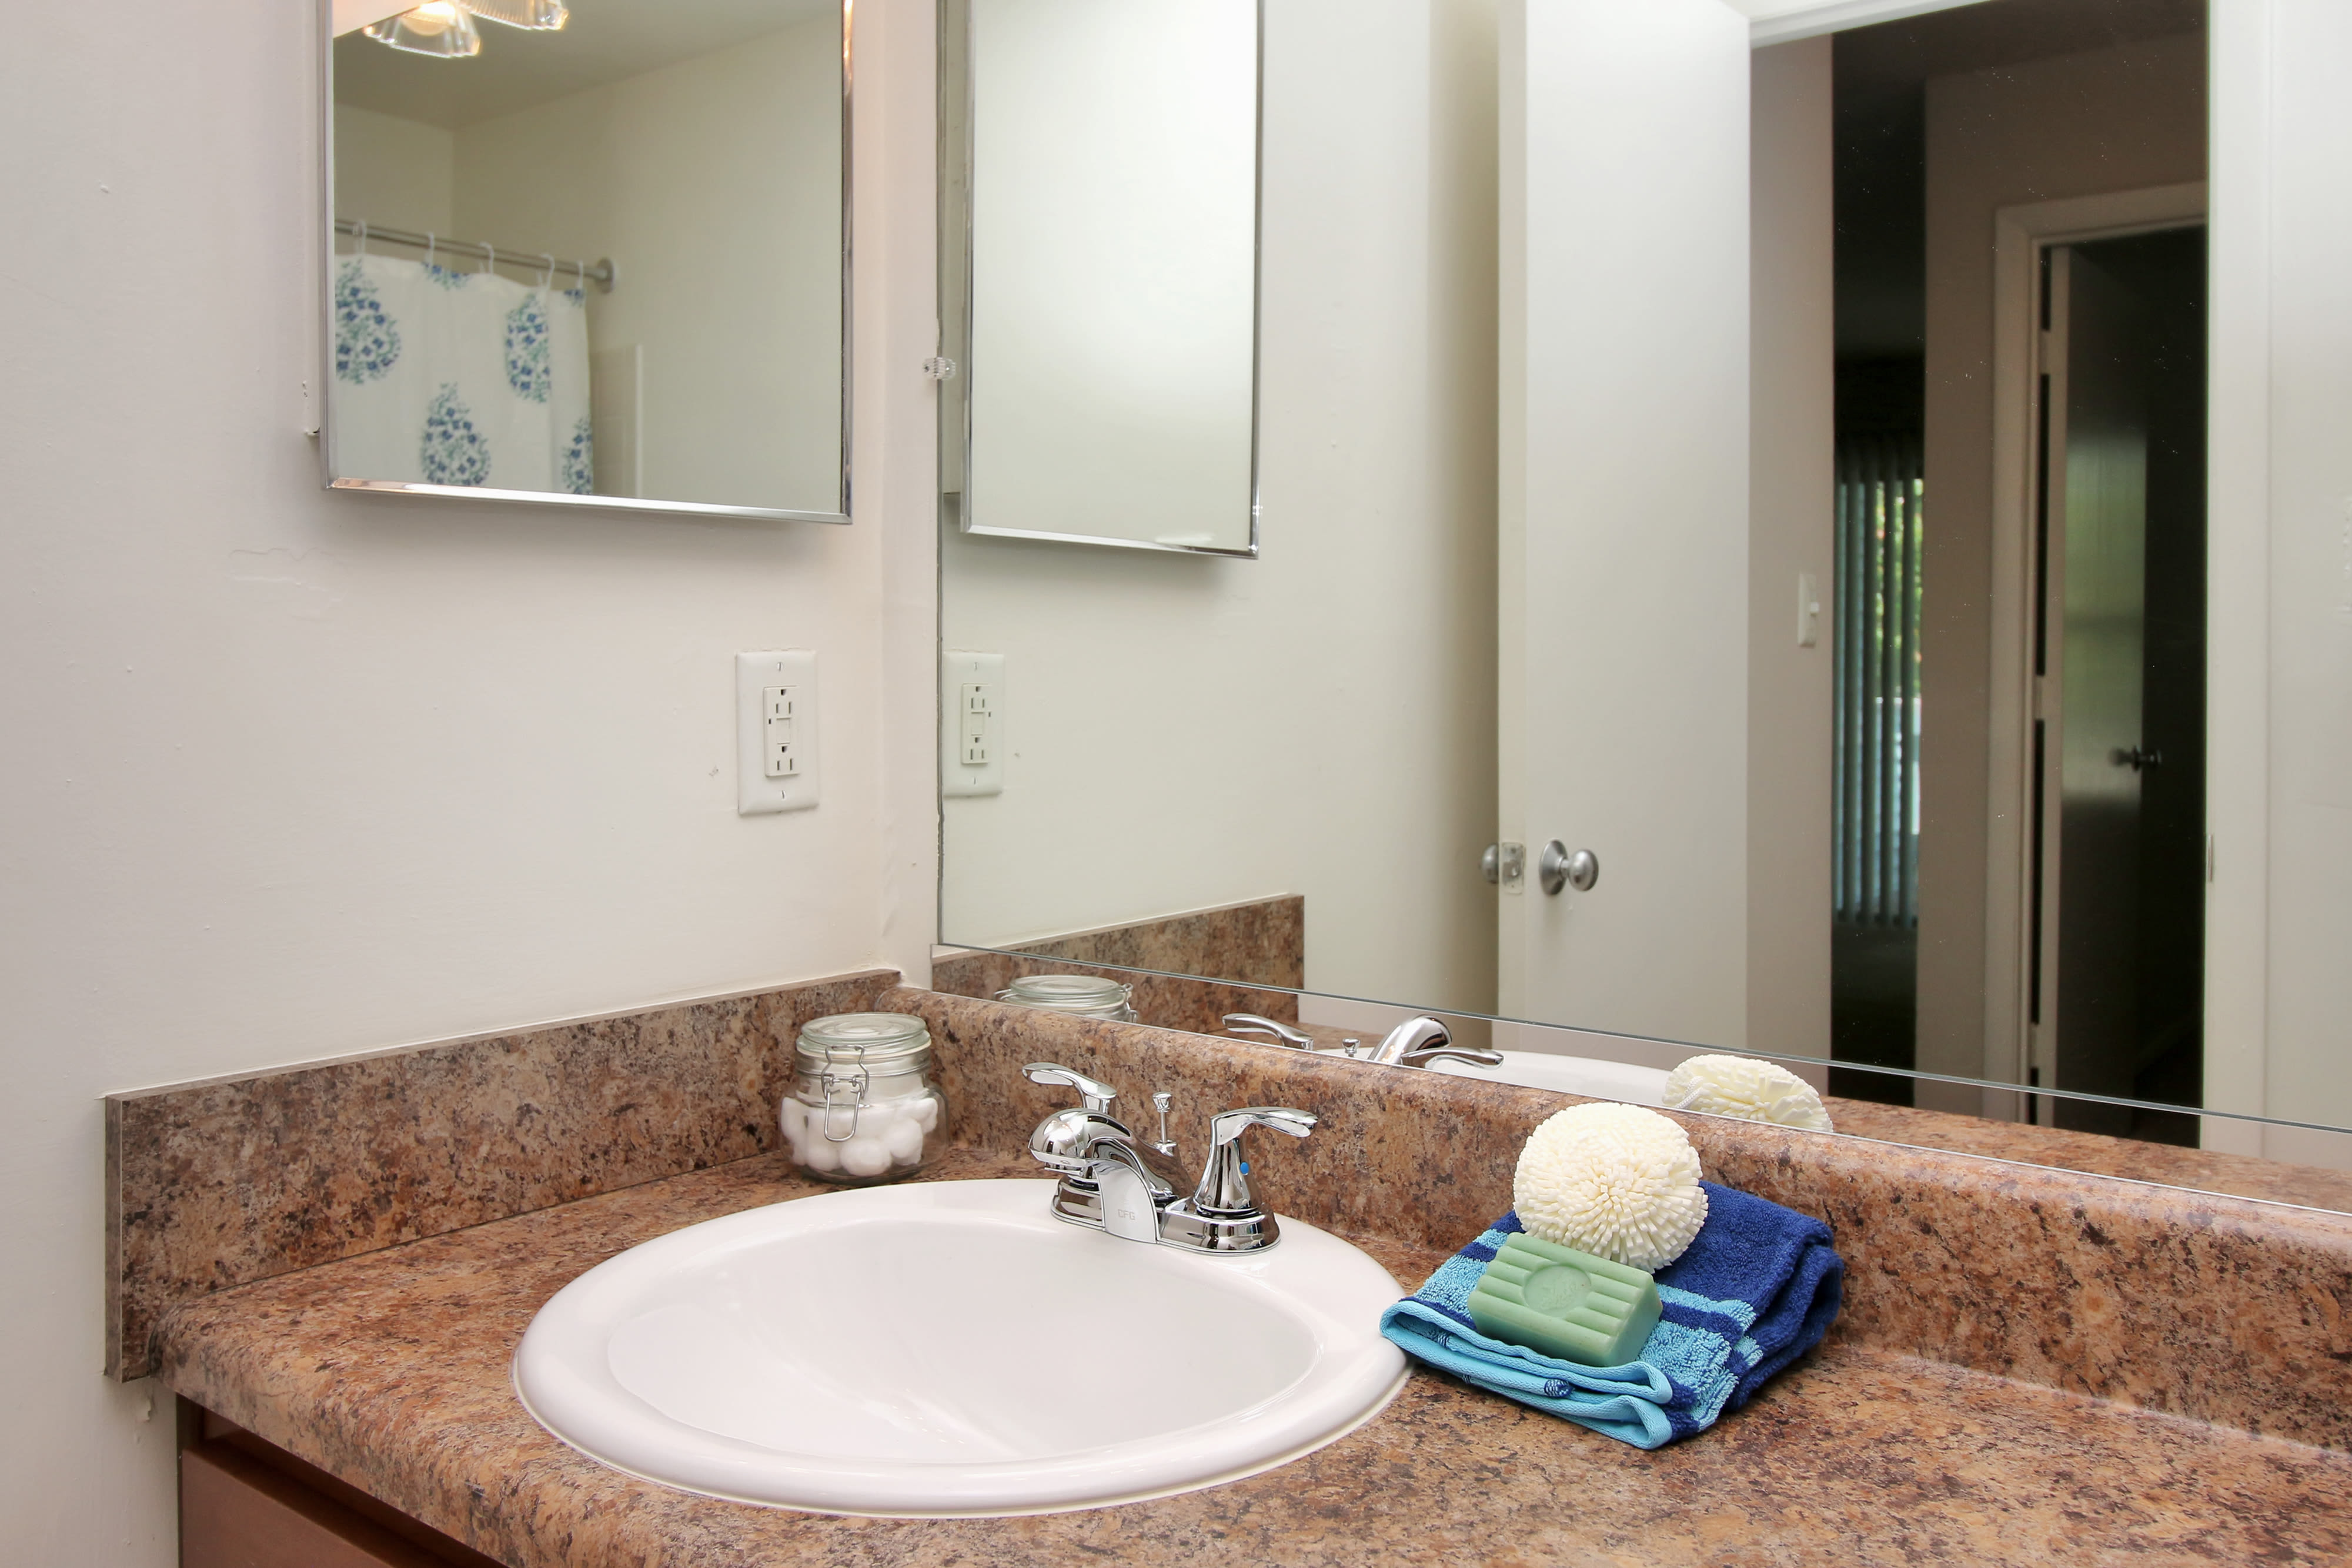 Bathroom sink at Runaway Bay Apartments in Virginia Beach, Virginia